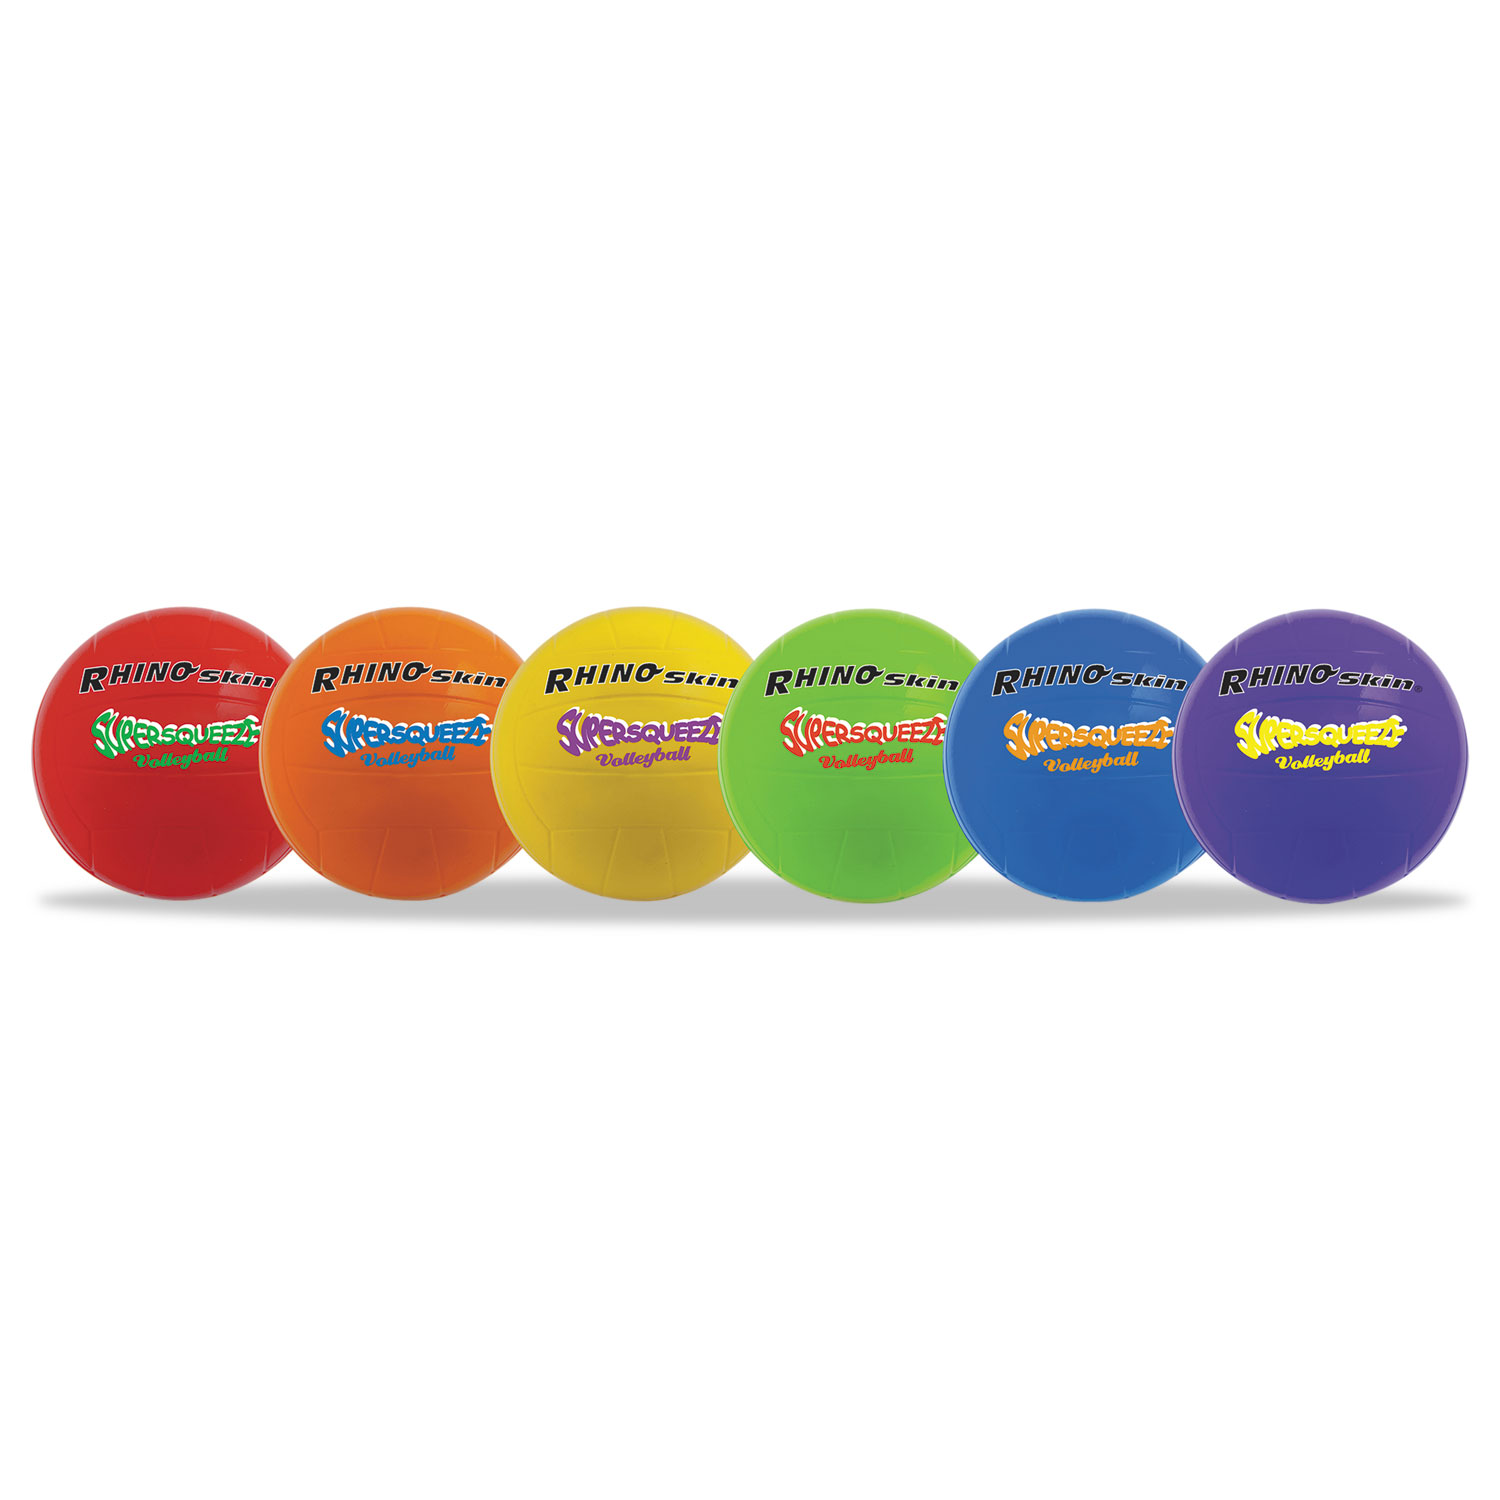 Super Squeeze Volleyball Set, Rhino Skin, Assorted, 6 Balls/Set